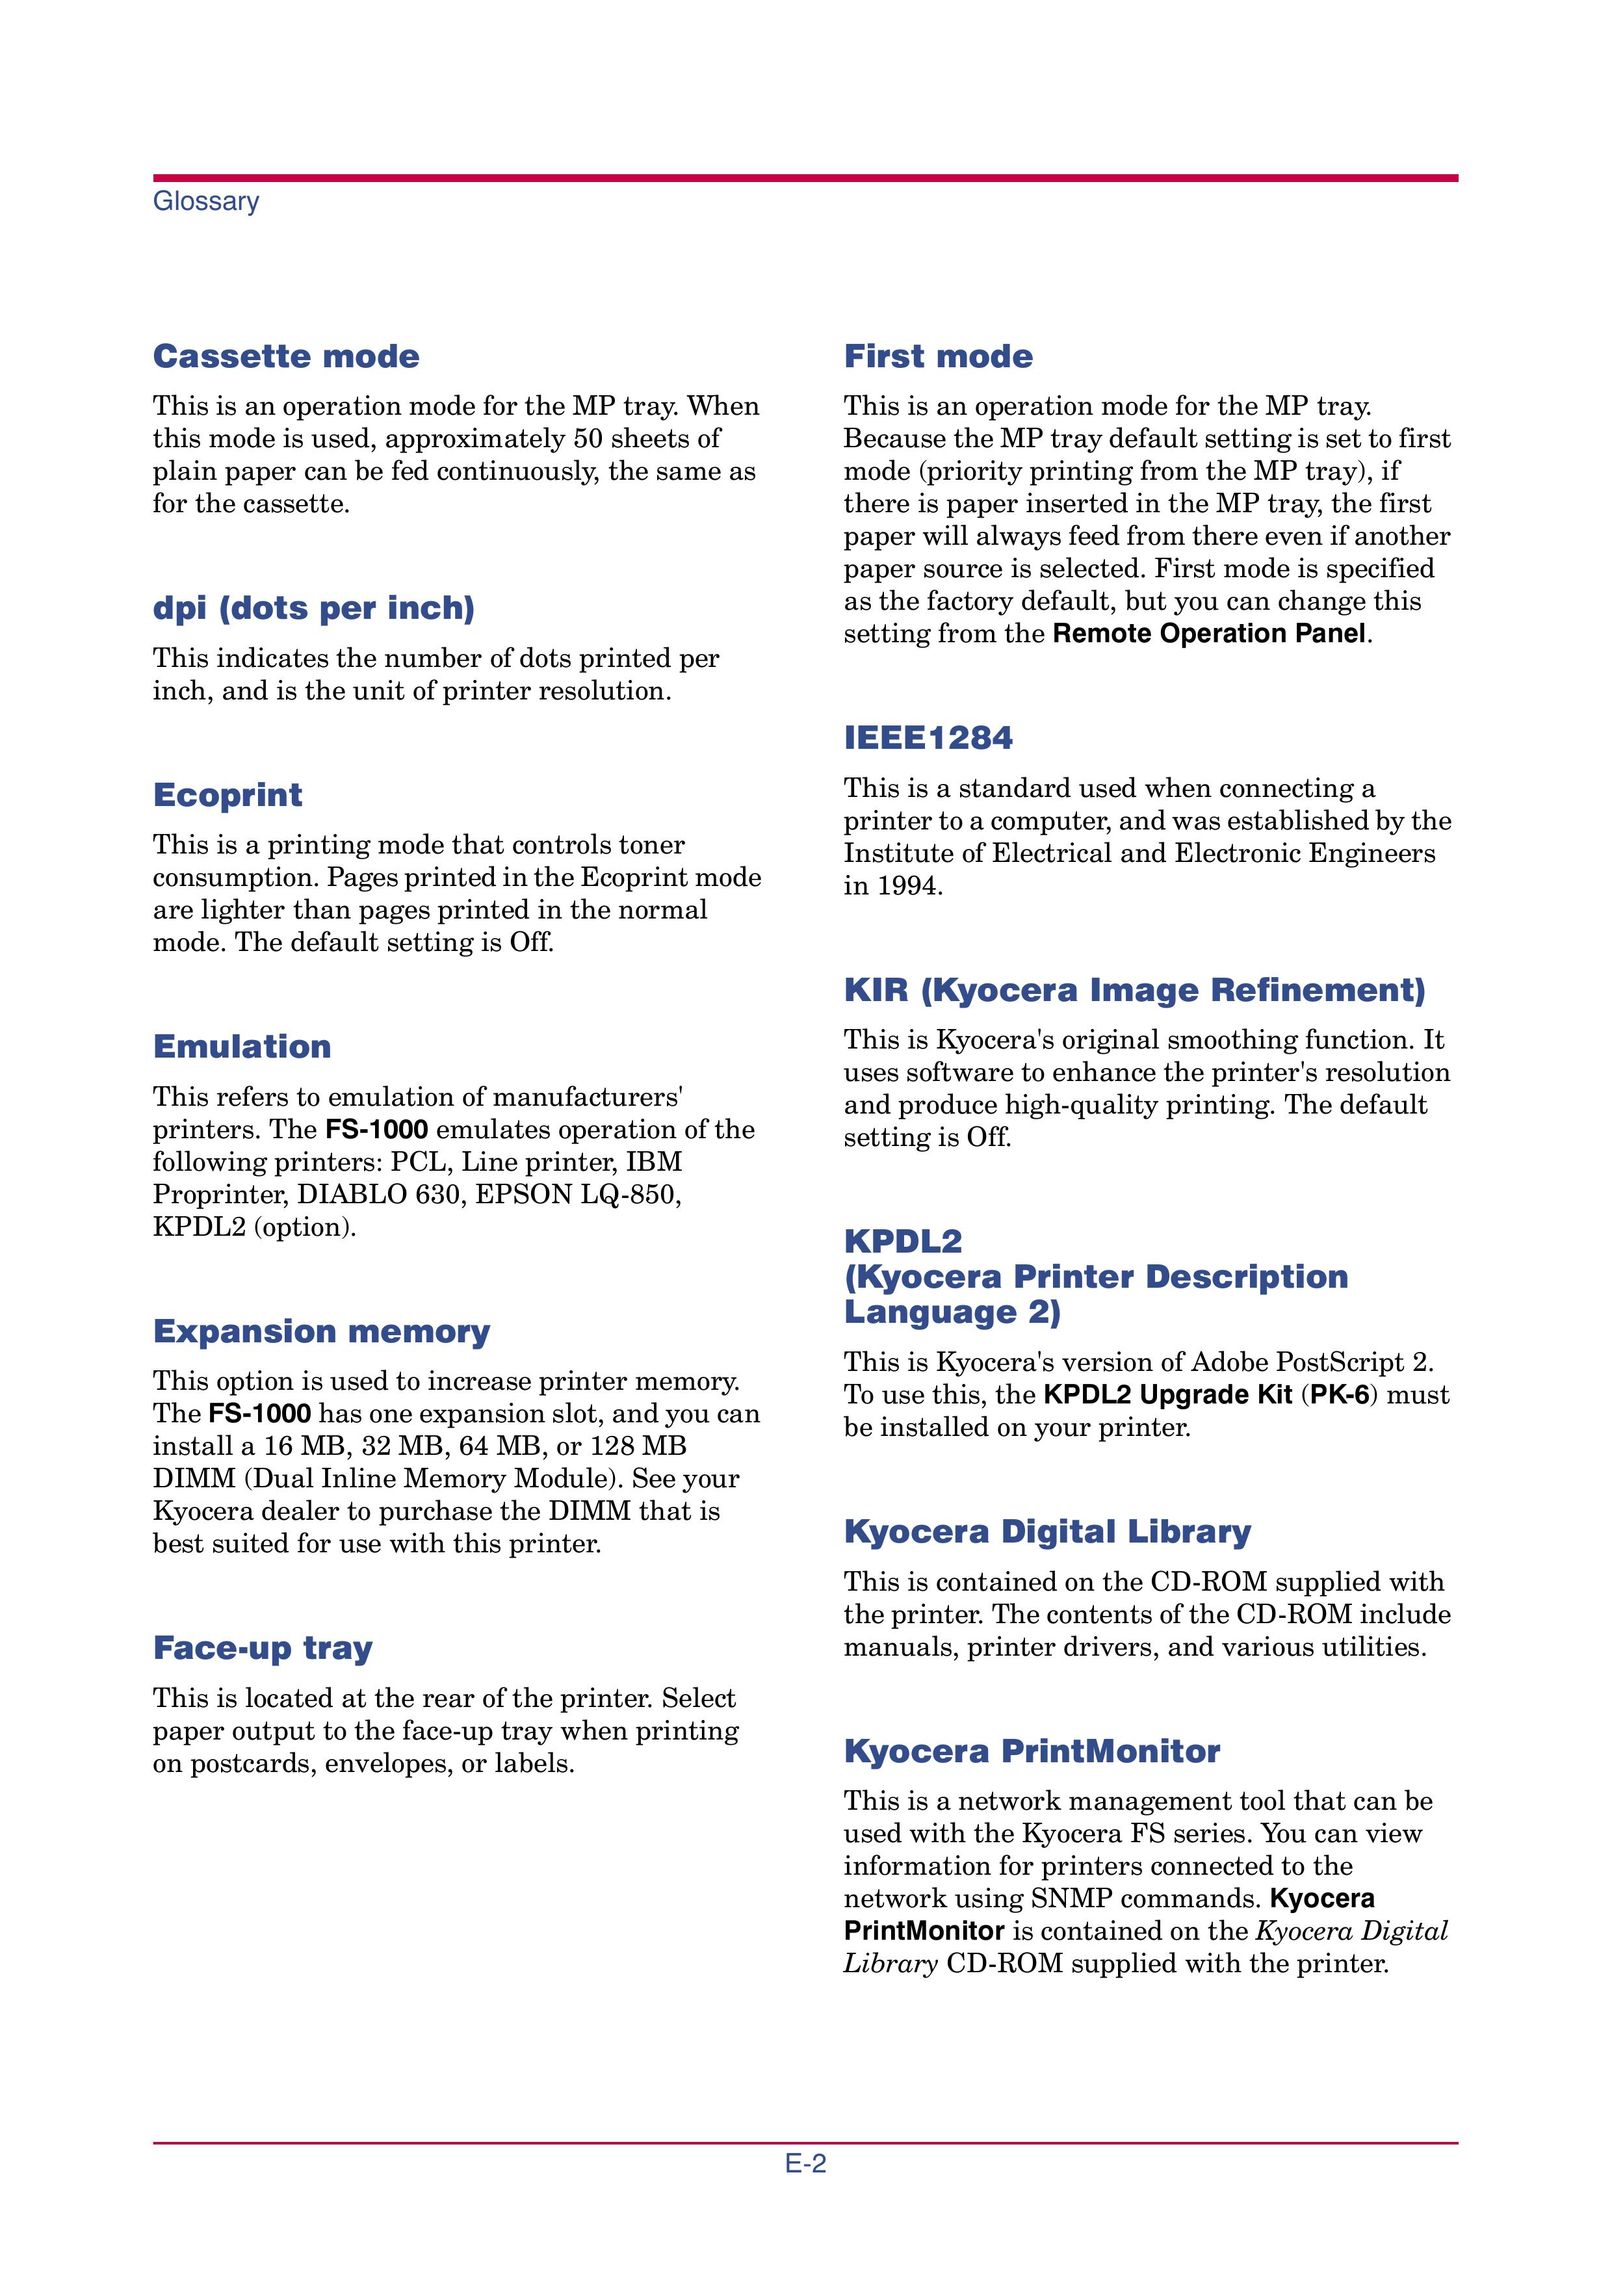 Kyocera FS-1000 Printer User Manual (Page 131)